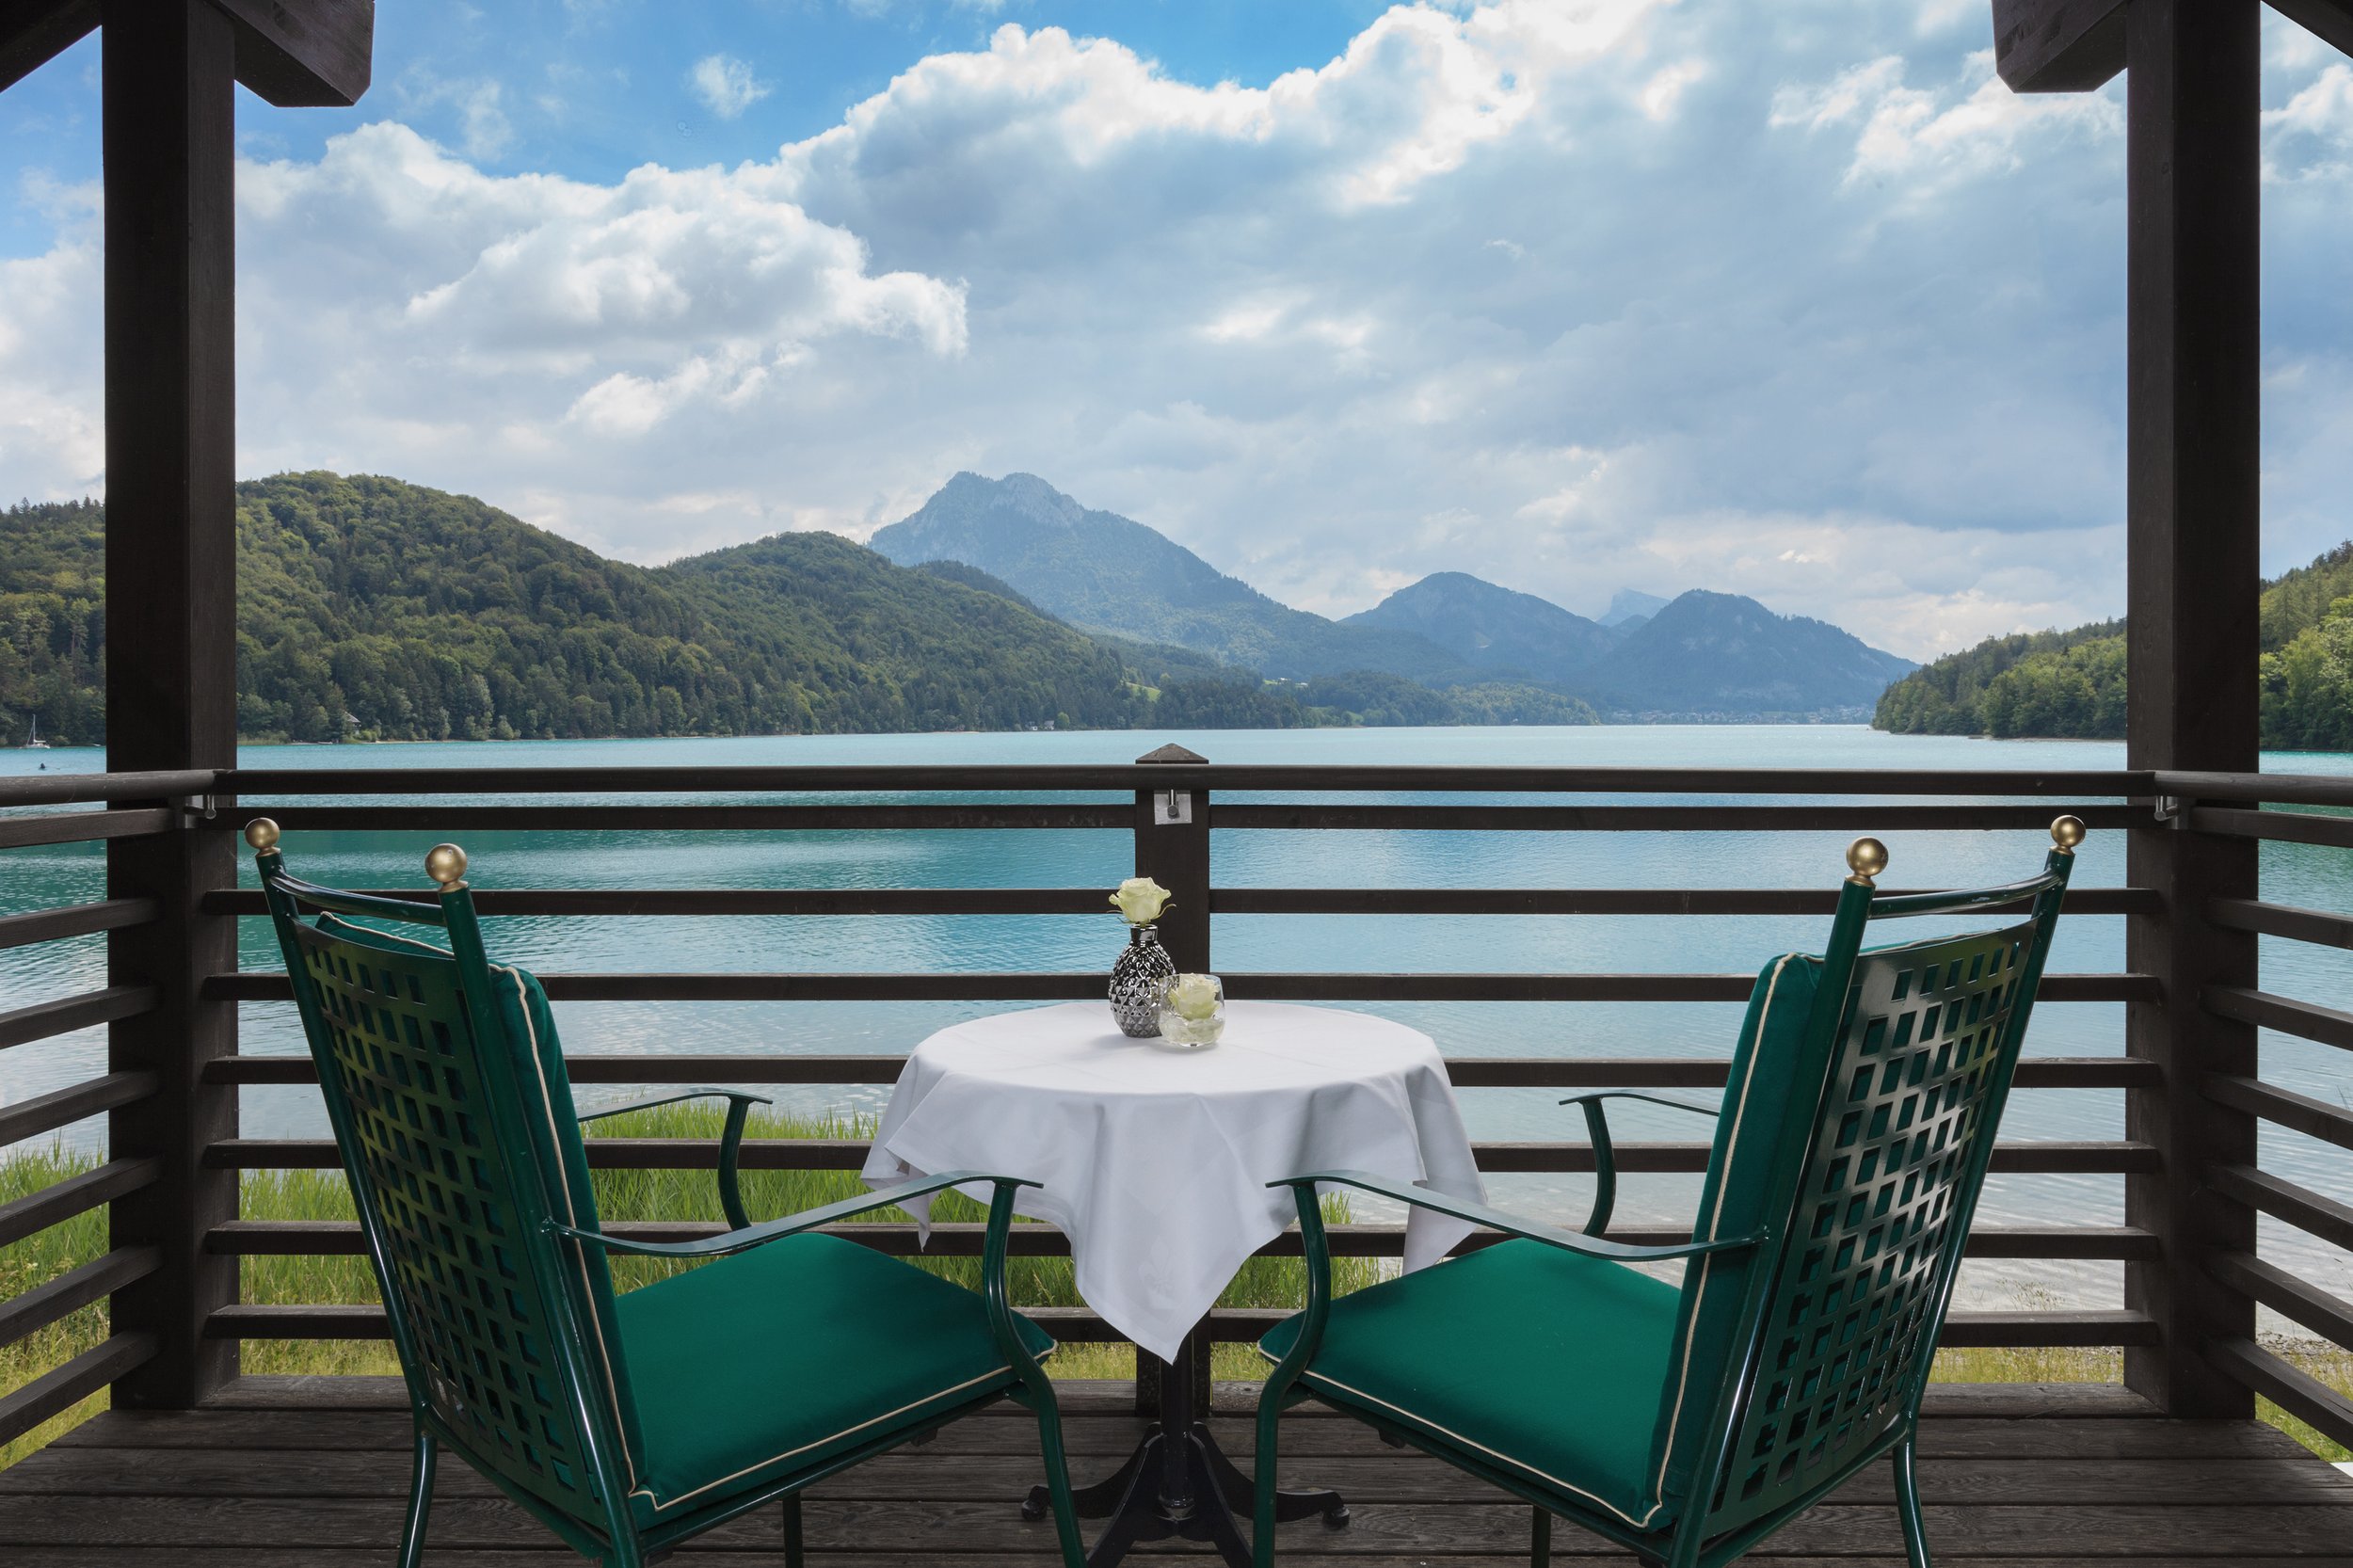 Dining overlooking Lake Fuschl at Schloss Fuschl, a hotel in the Marriott Luxury Collection in Salzburg, Austria